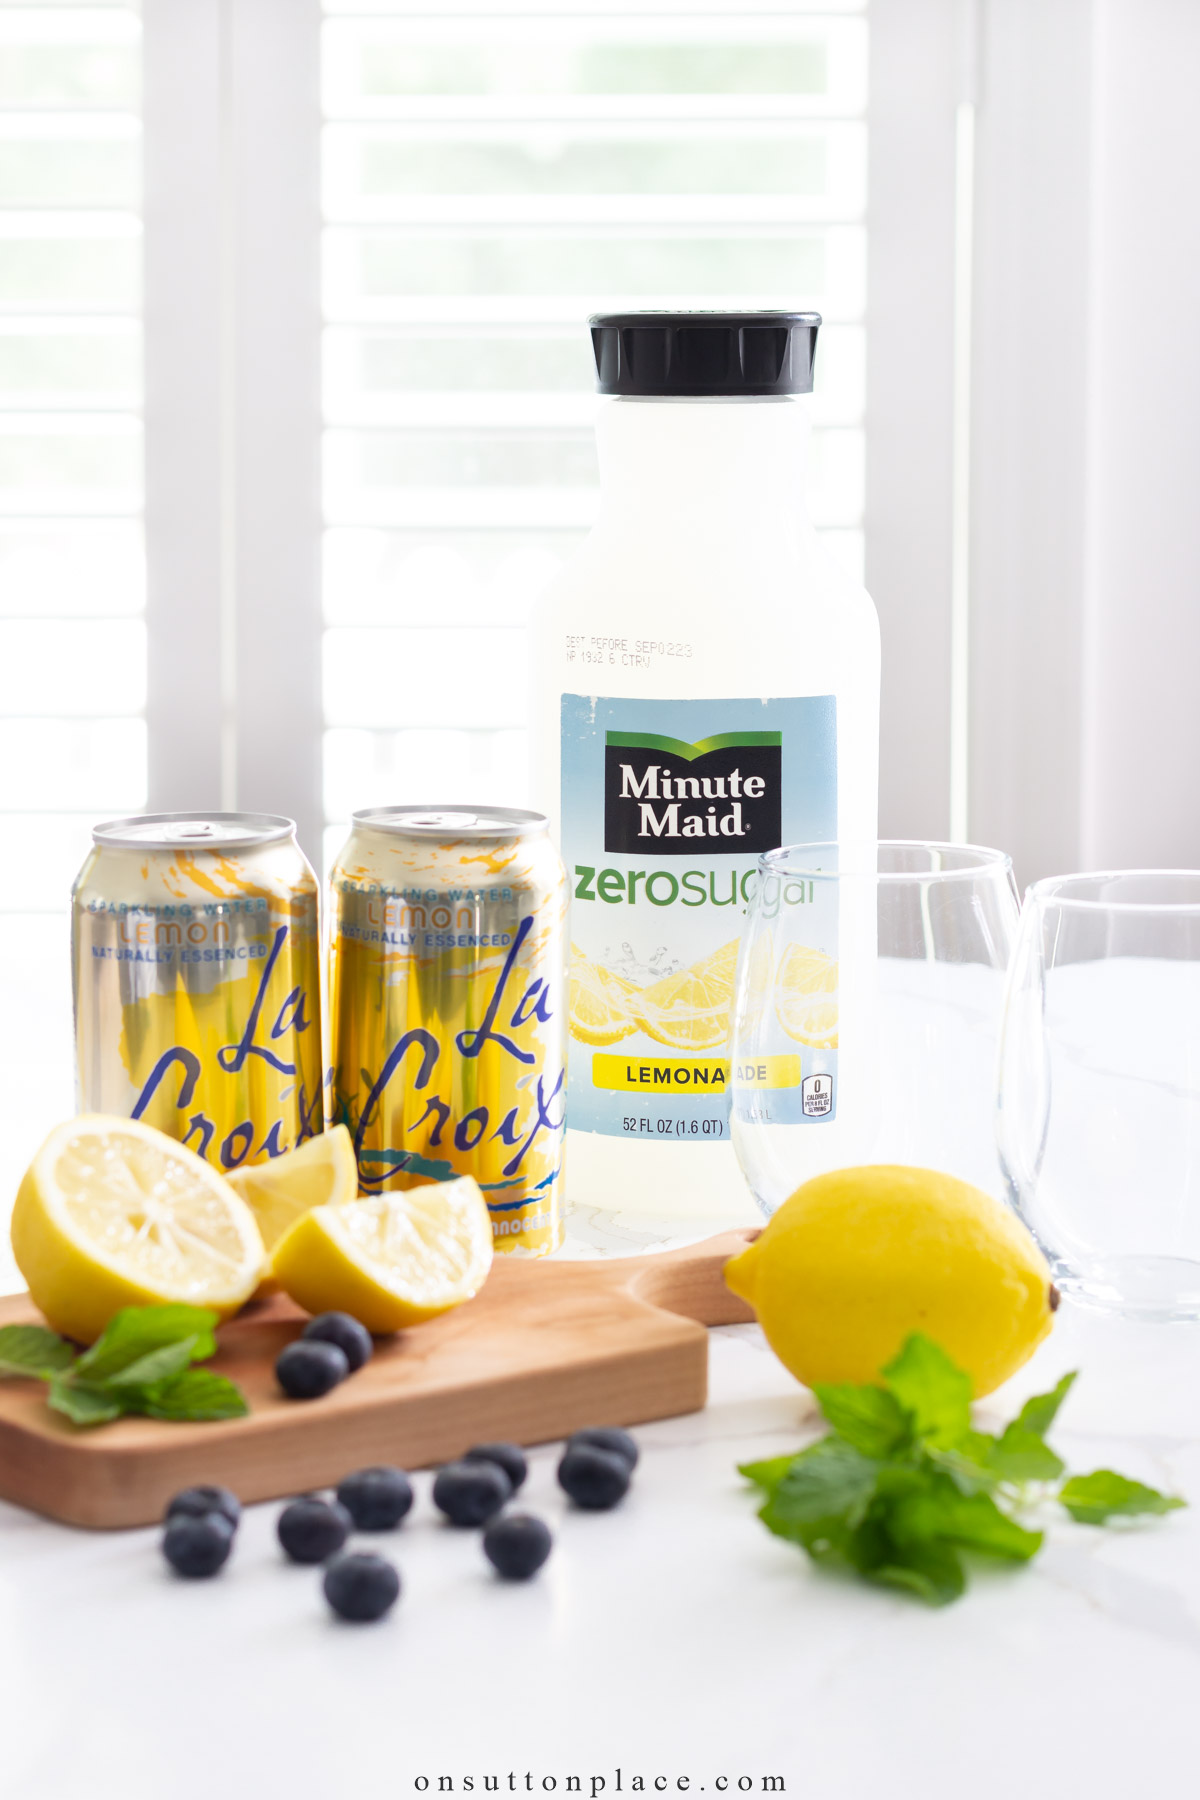 minute maid light lemonade logo